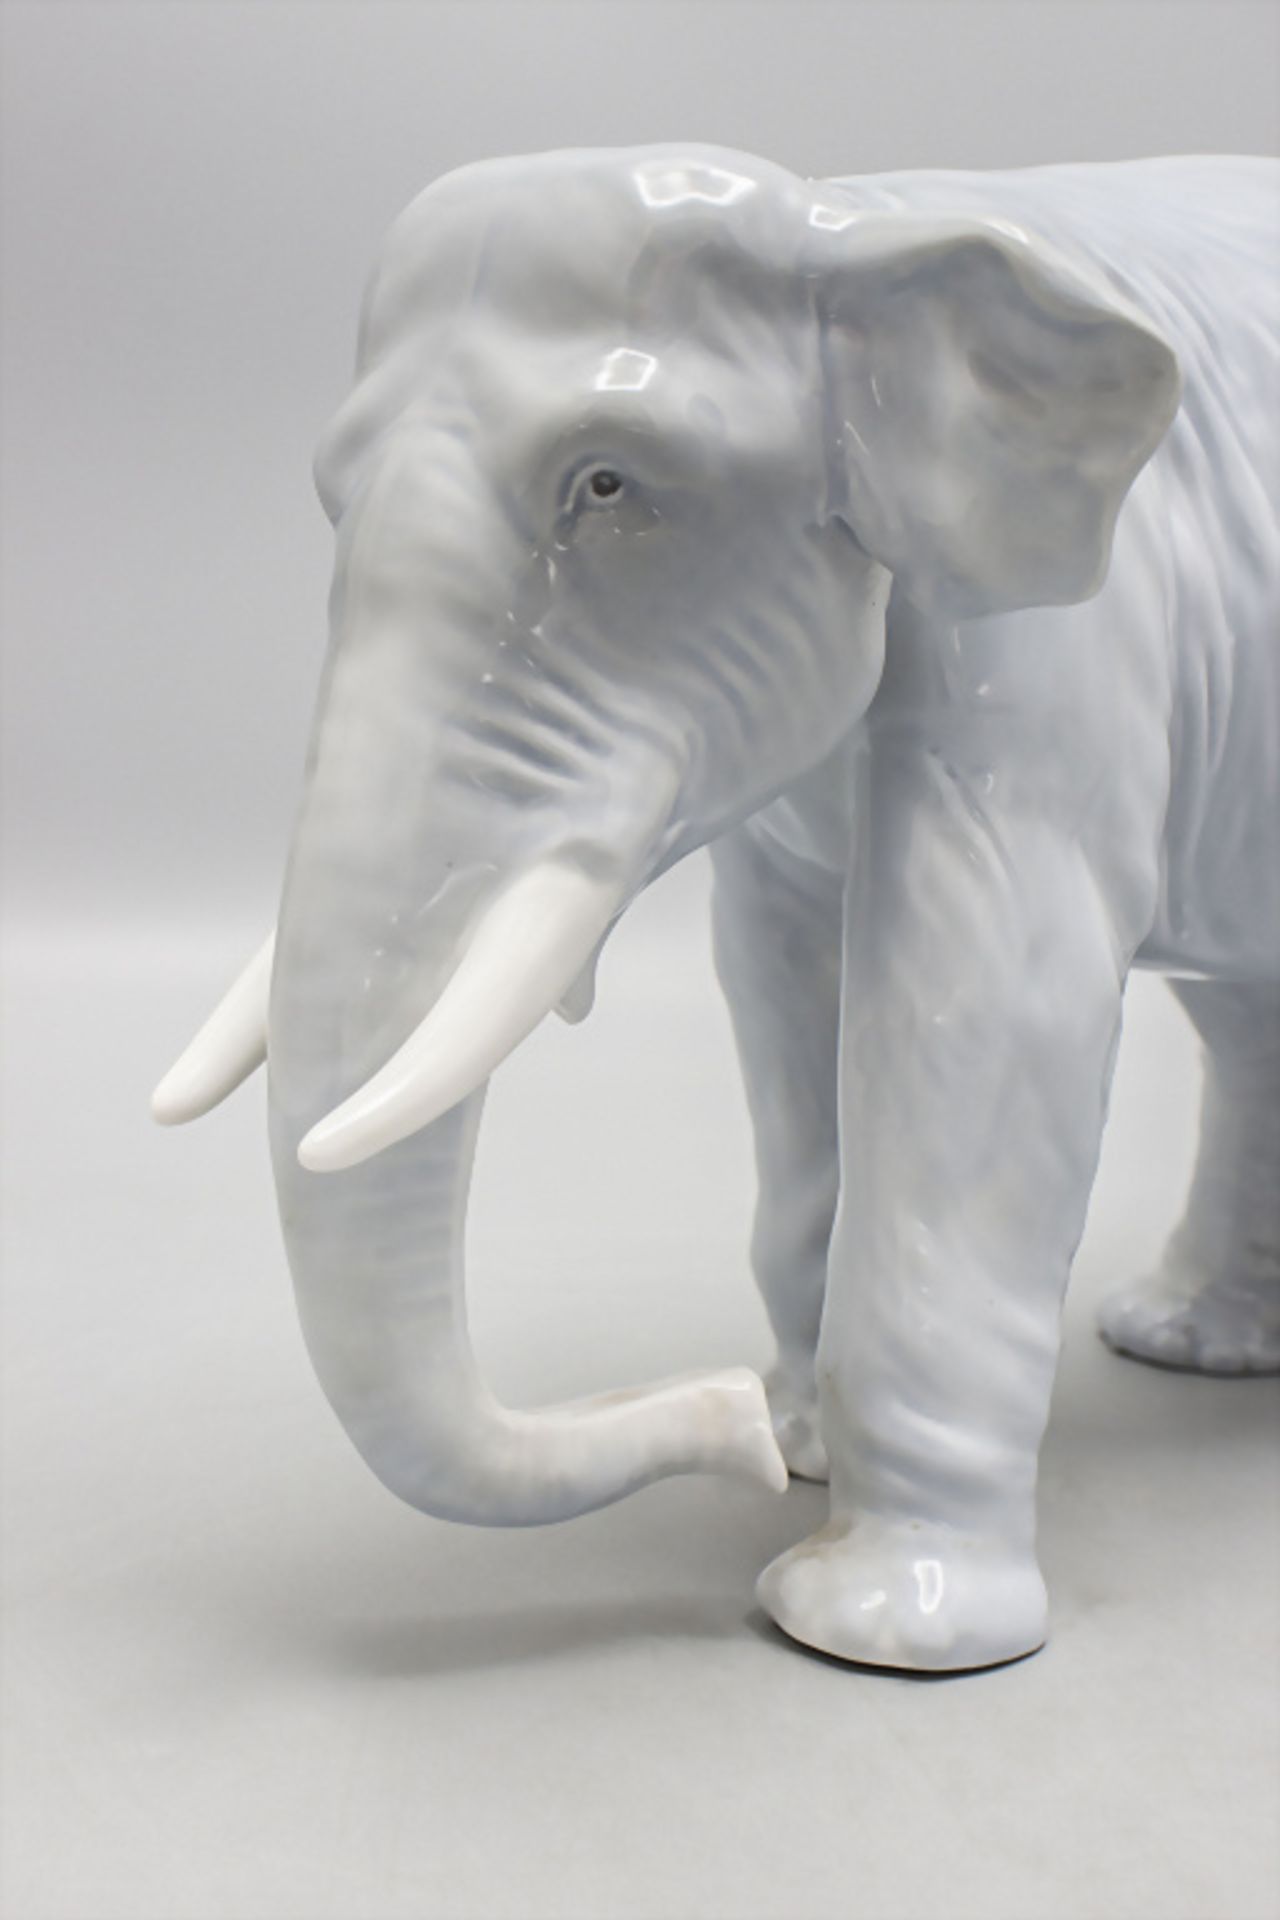 Tierfigur 'Asiatischer Elefant'' / A procelain animal figure of an Asian elephant, E. Pfeffer, ... - Image 6 of 8